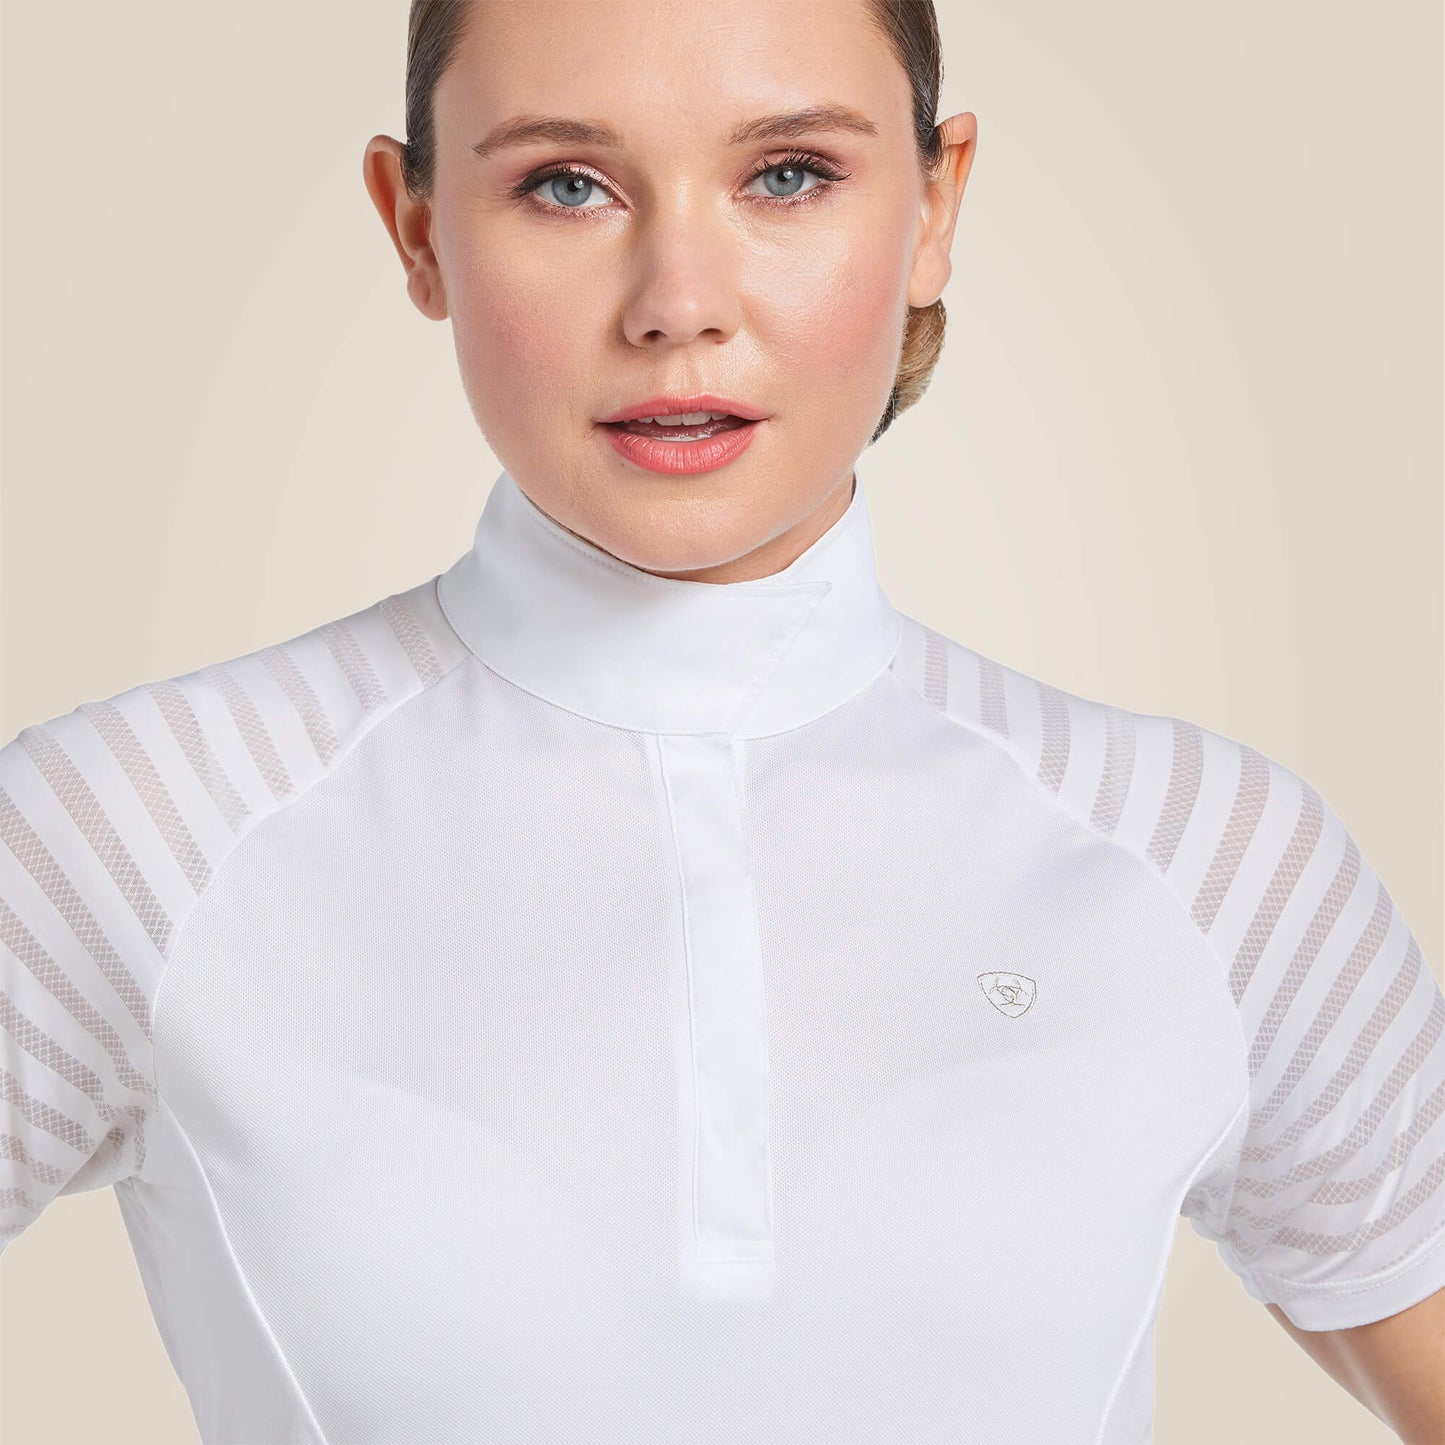 Aptos Vent Short Sleeve Show Shirt || Size XL ONLY